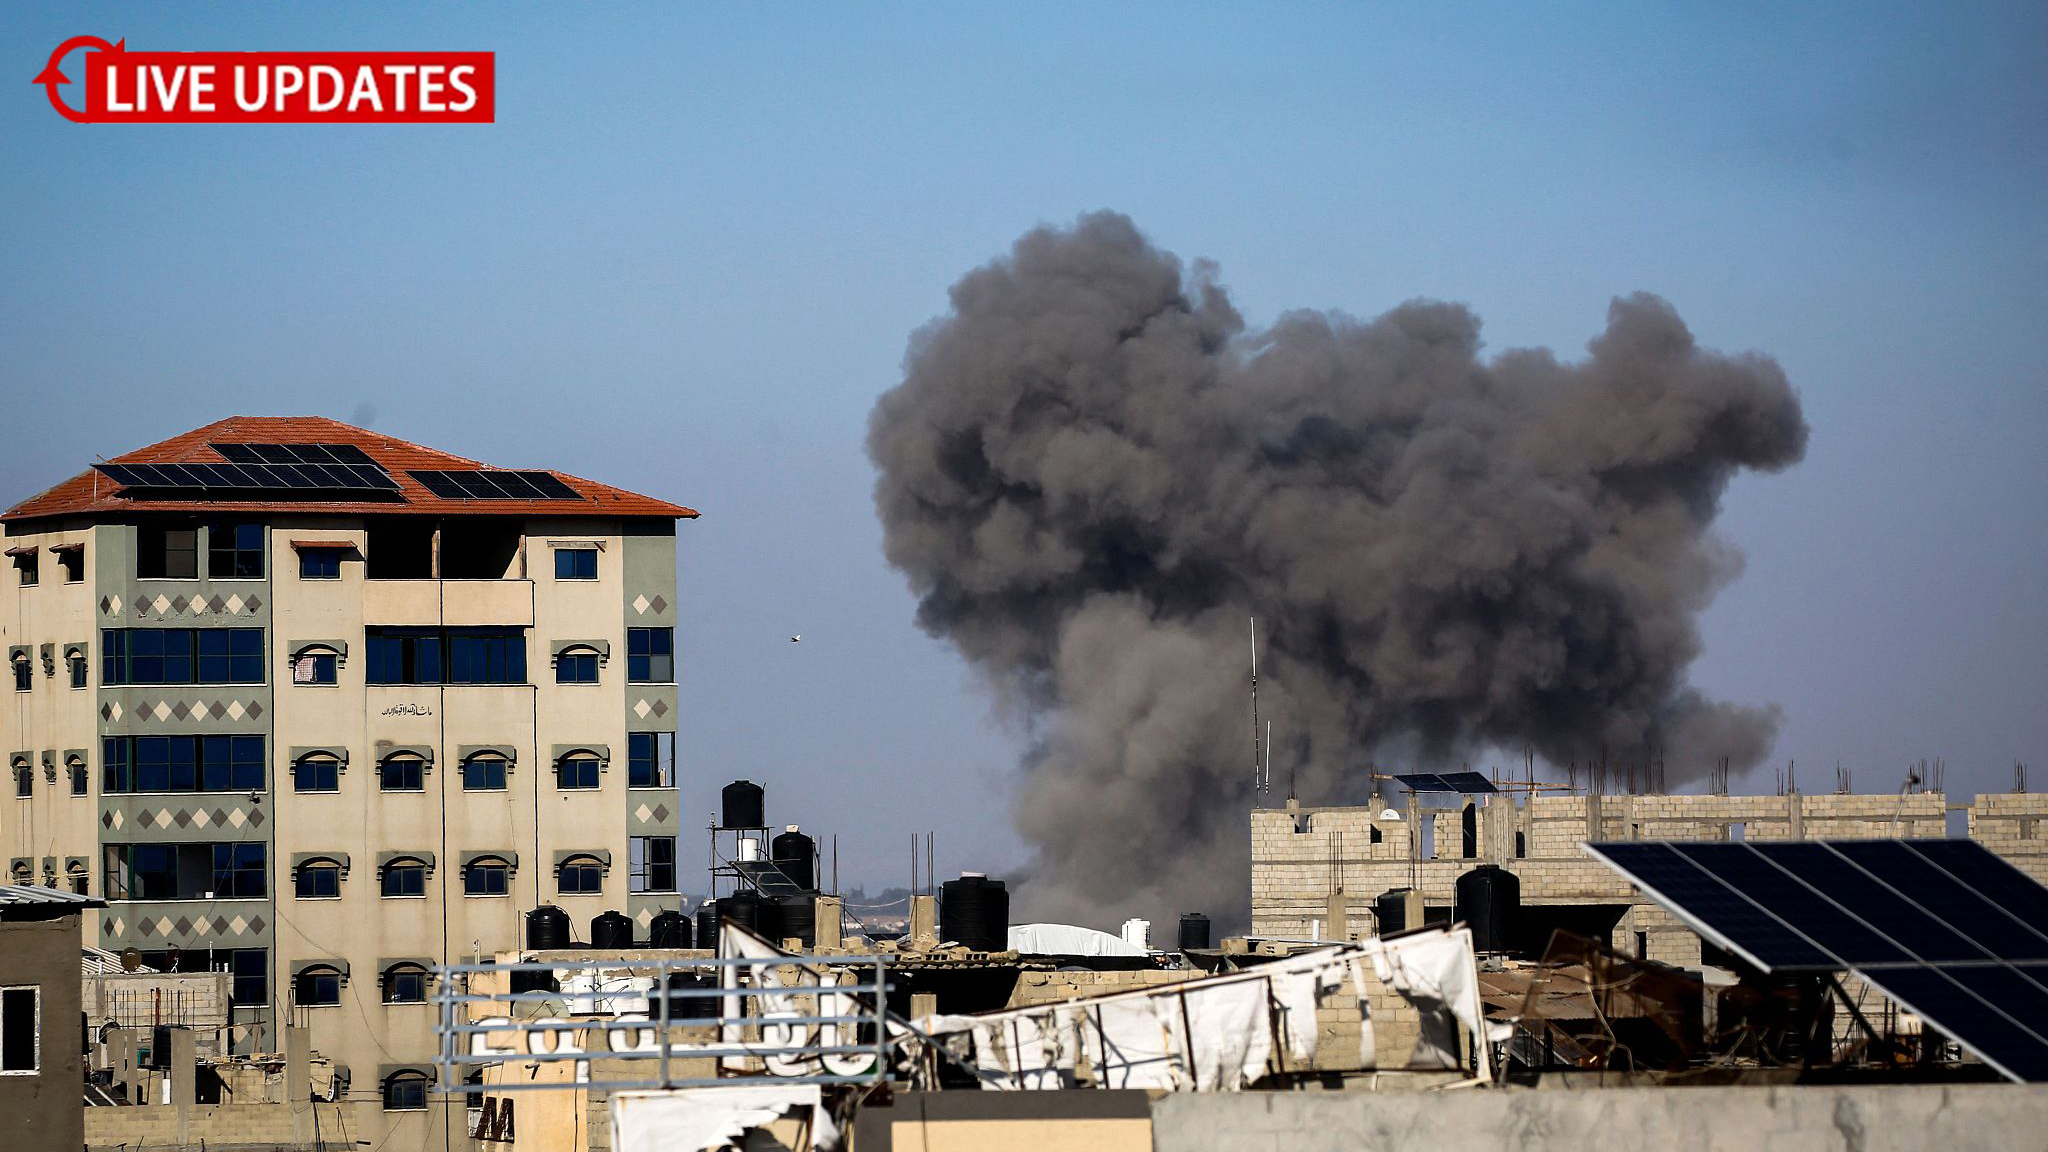 Live updates: Israel controls Rafah crossing as truce talks continue